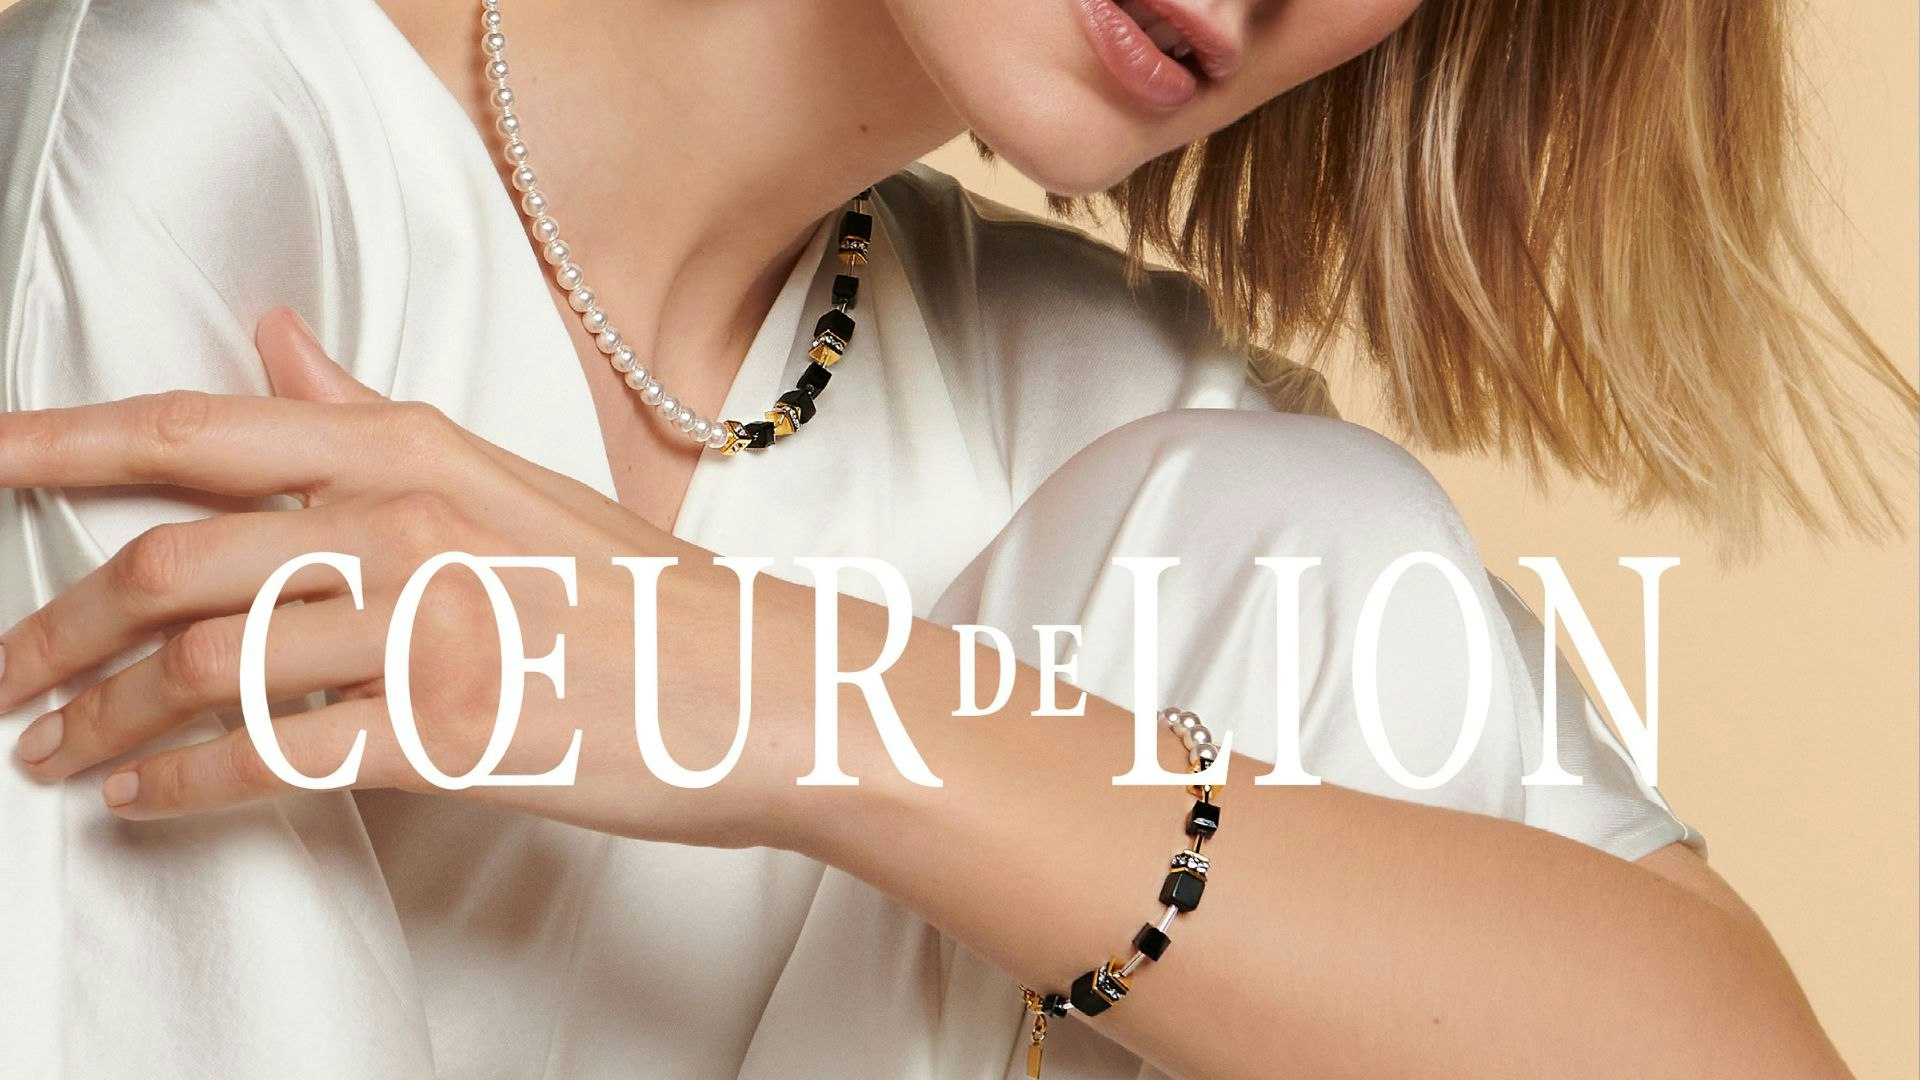 Win a jewellery set from COEUR DE LION worth £263